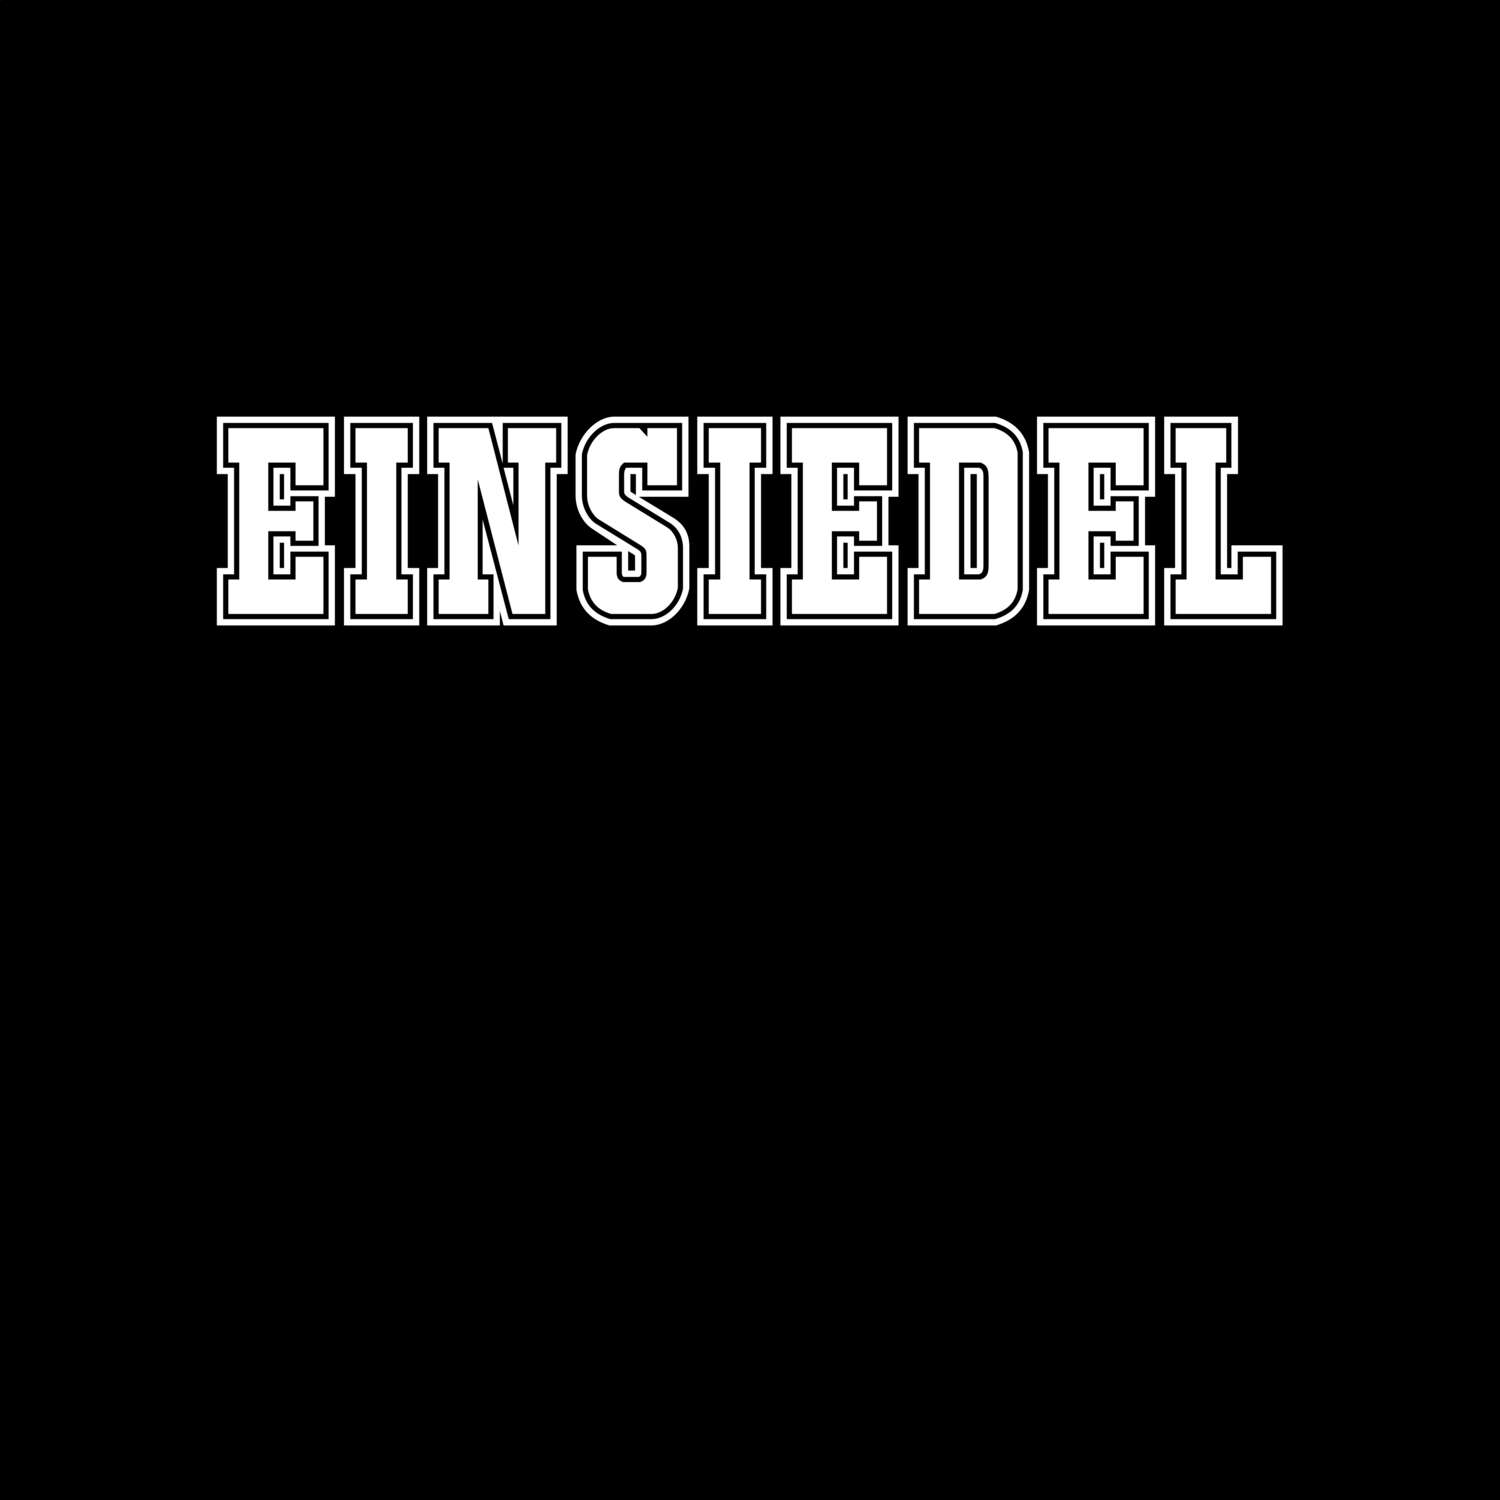 Einsiedel T-Shirt »Classic«